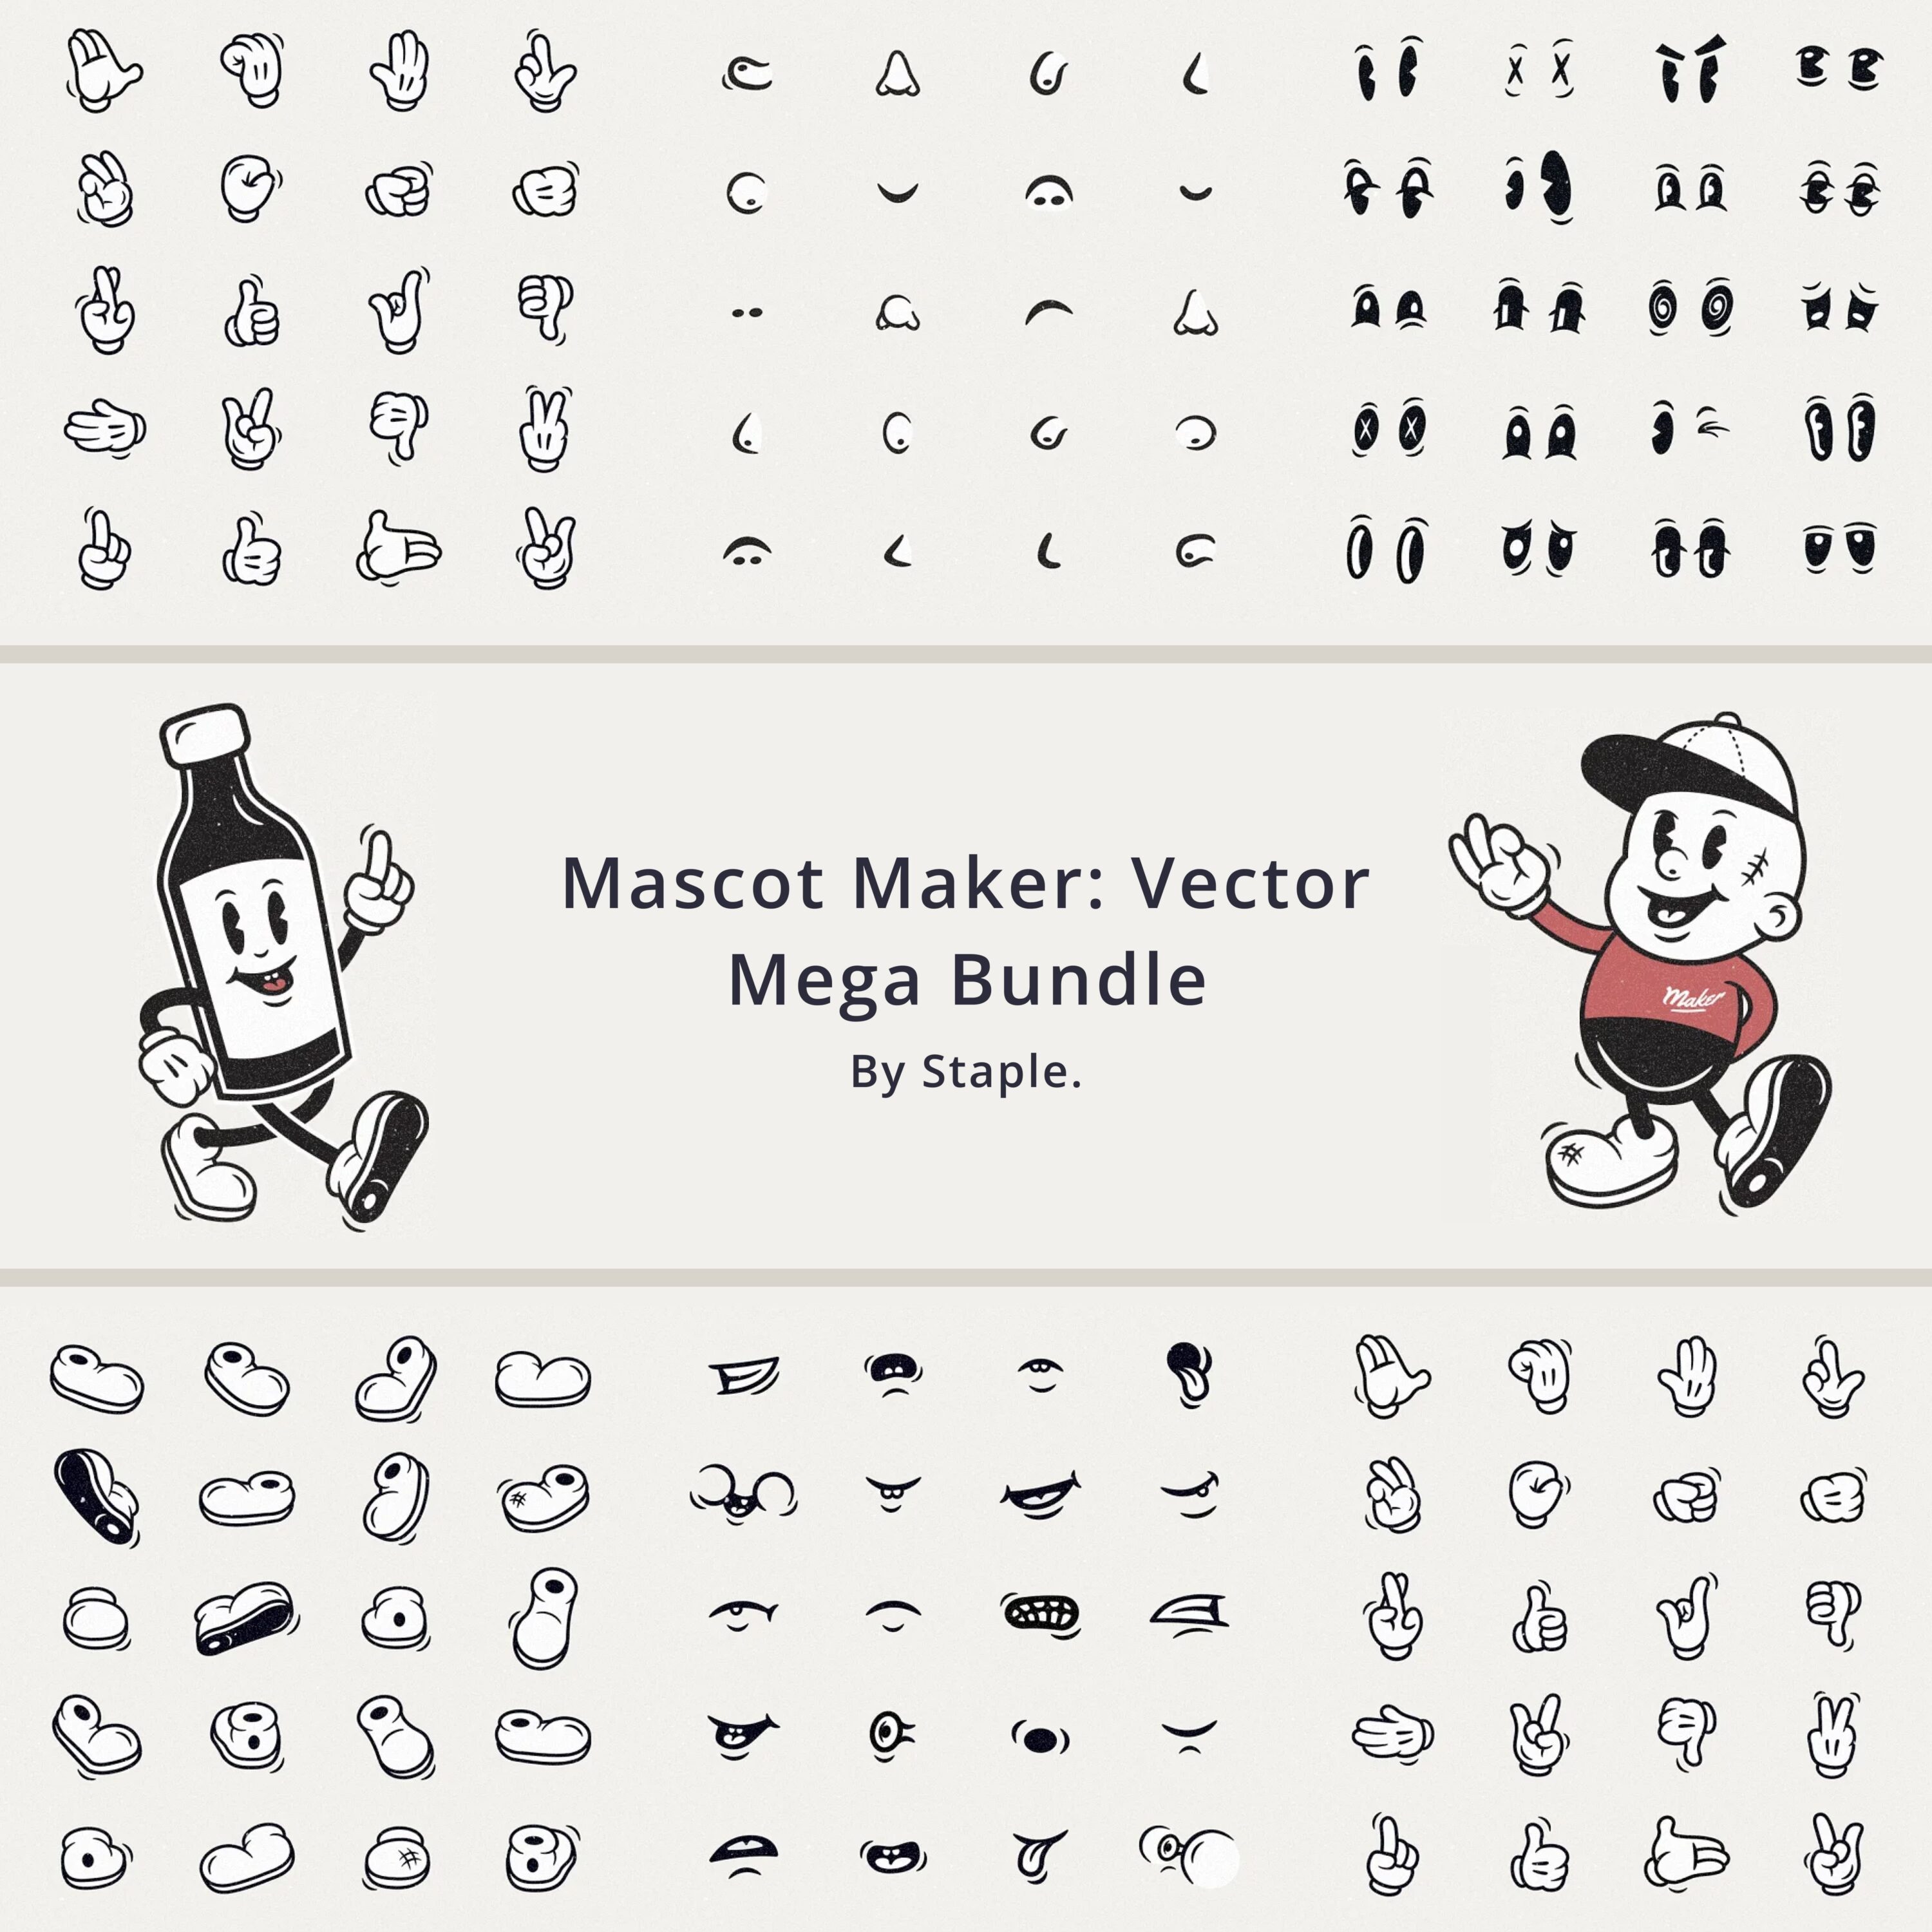 Mascot Maker: Vector Mega Bundle cover image.